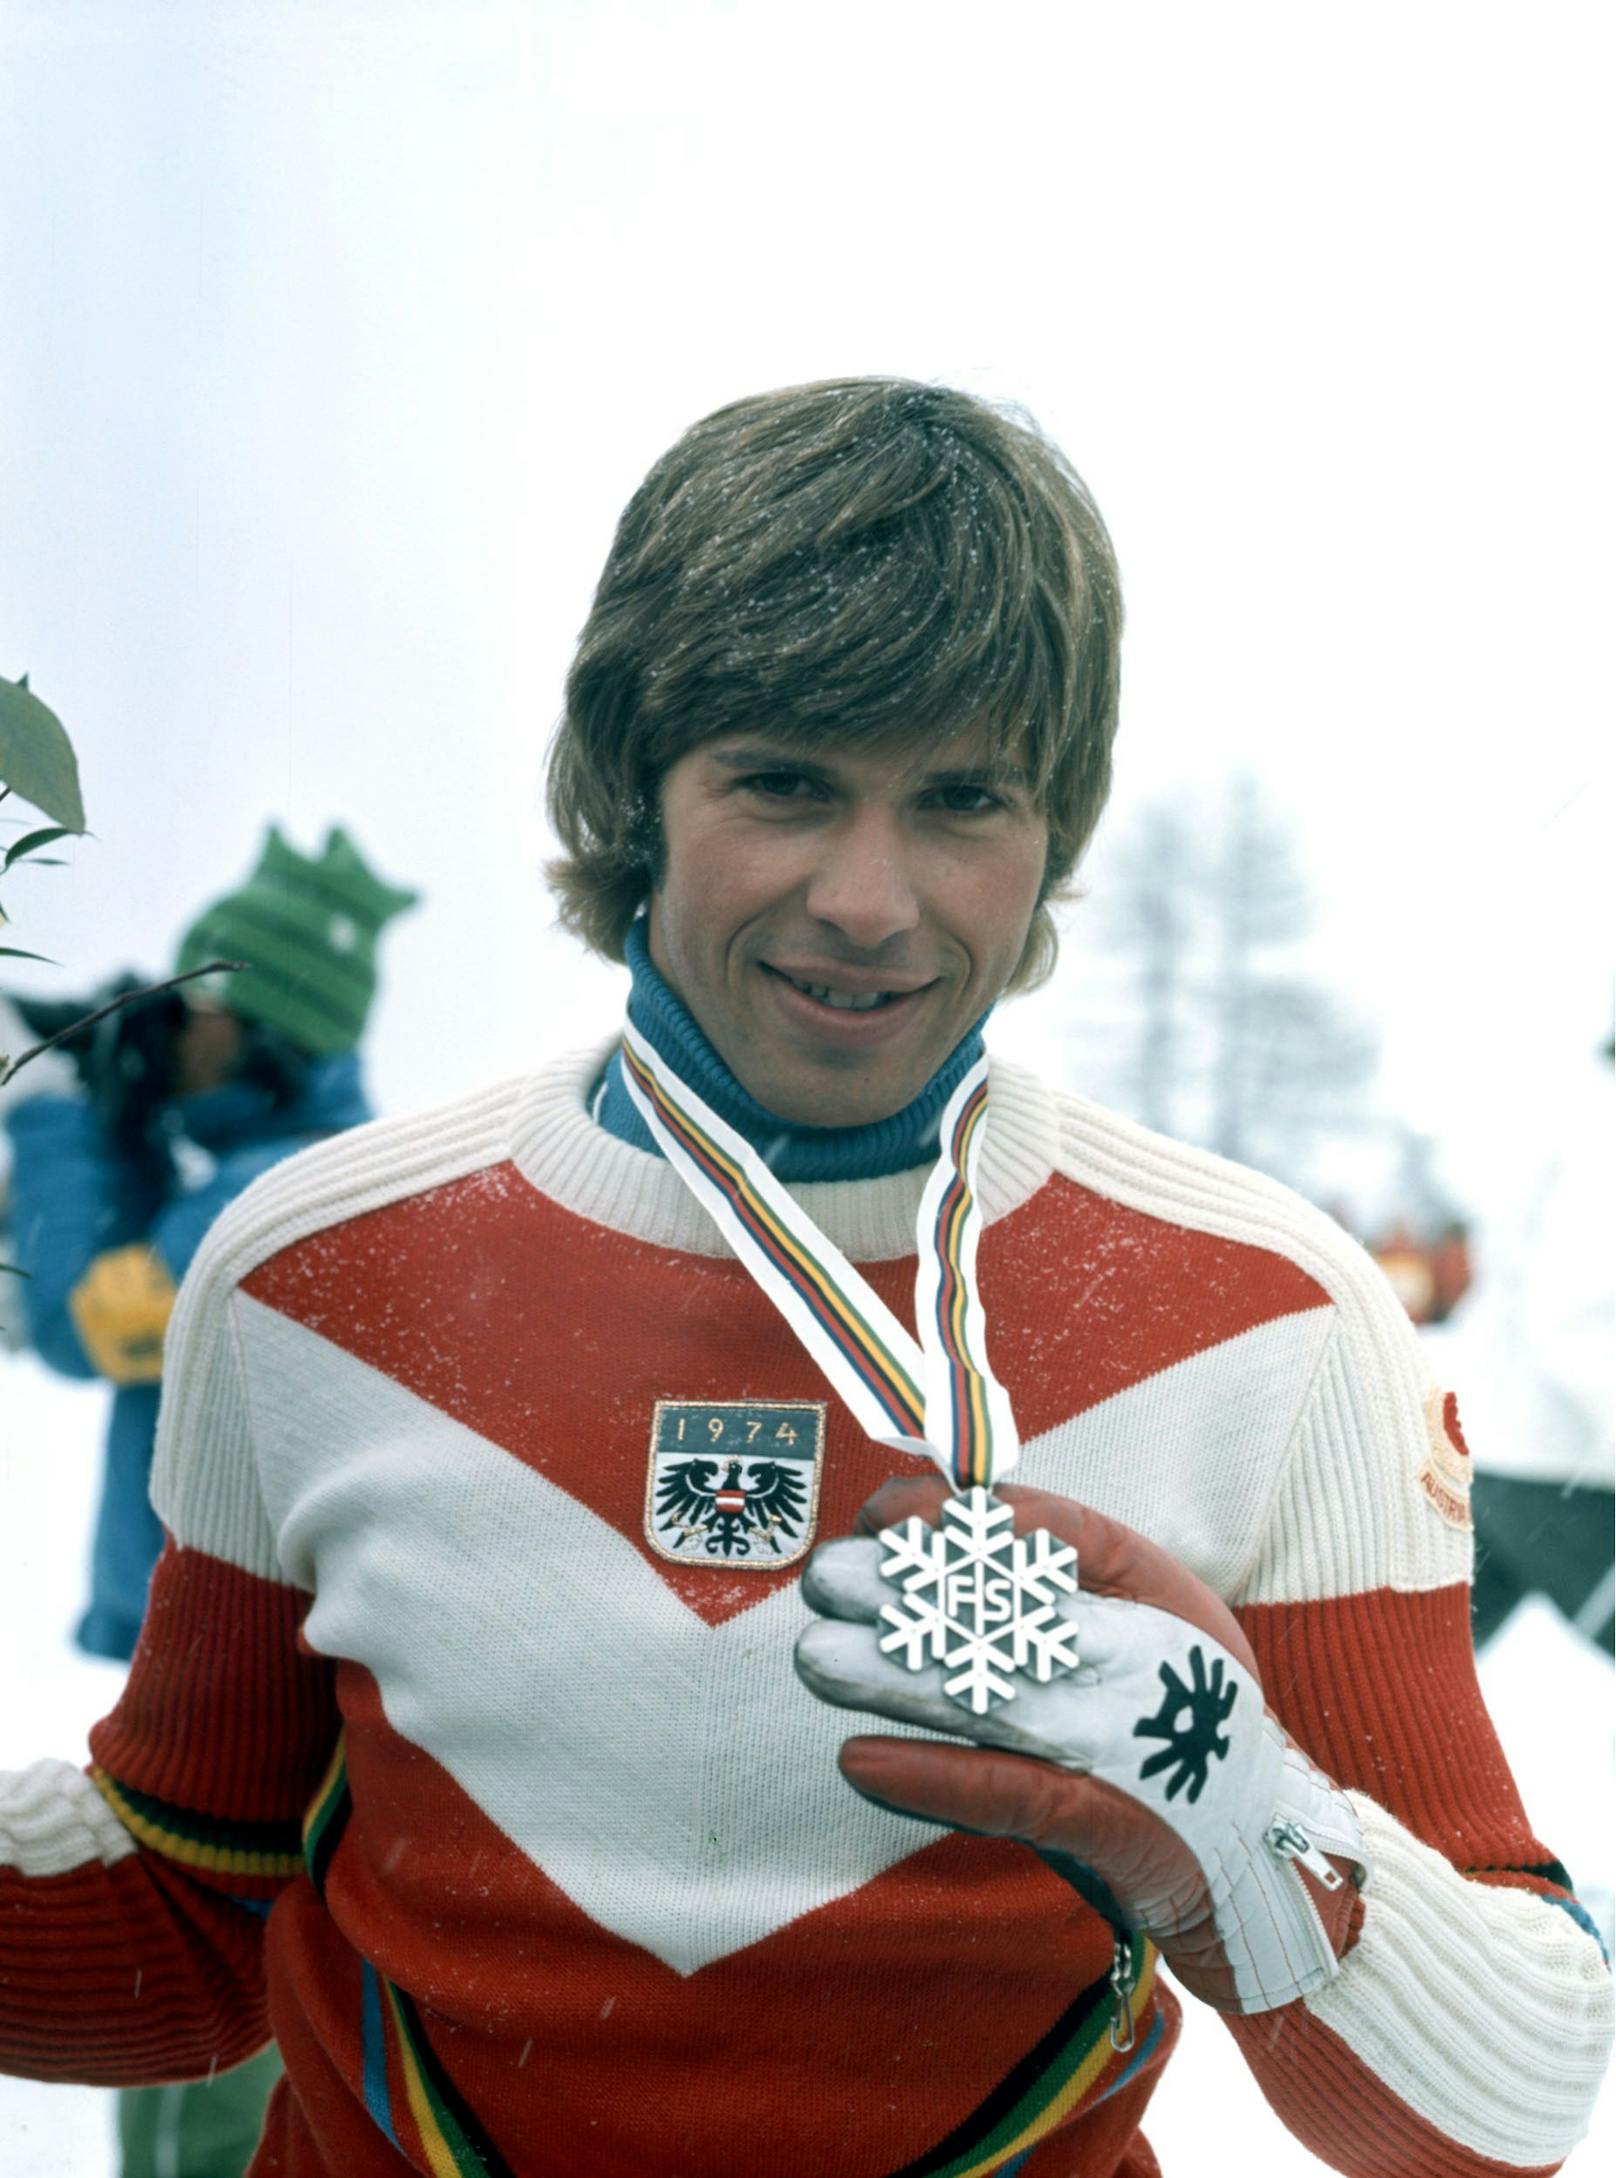 Silbermedaille bei der Weltmeisterschaft im Riesenslalom 1974